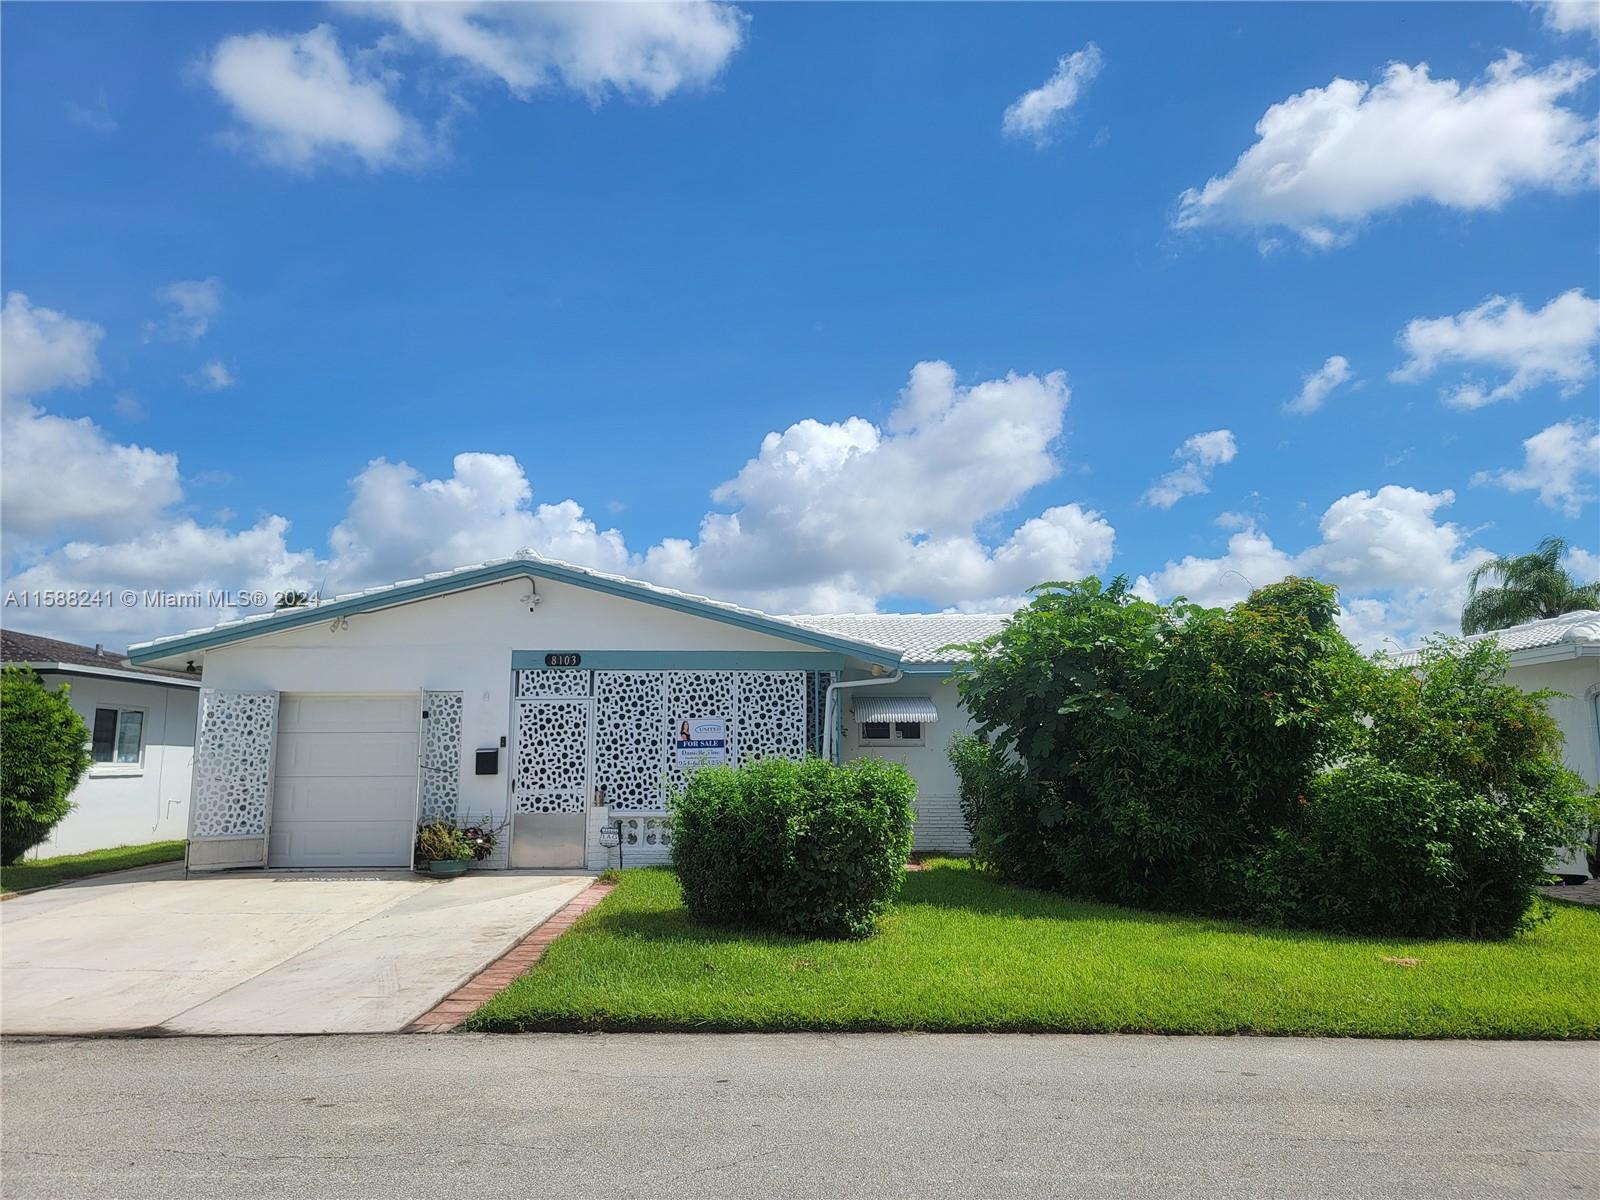 Property for Sale at 8103 Nw 59th Ct, Tamarac, Broward County, Florida - Bedrooms: 2 
Bathrooms: 2  - $379,900